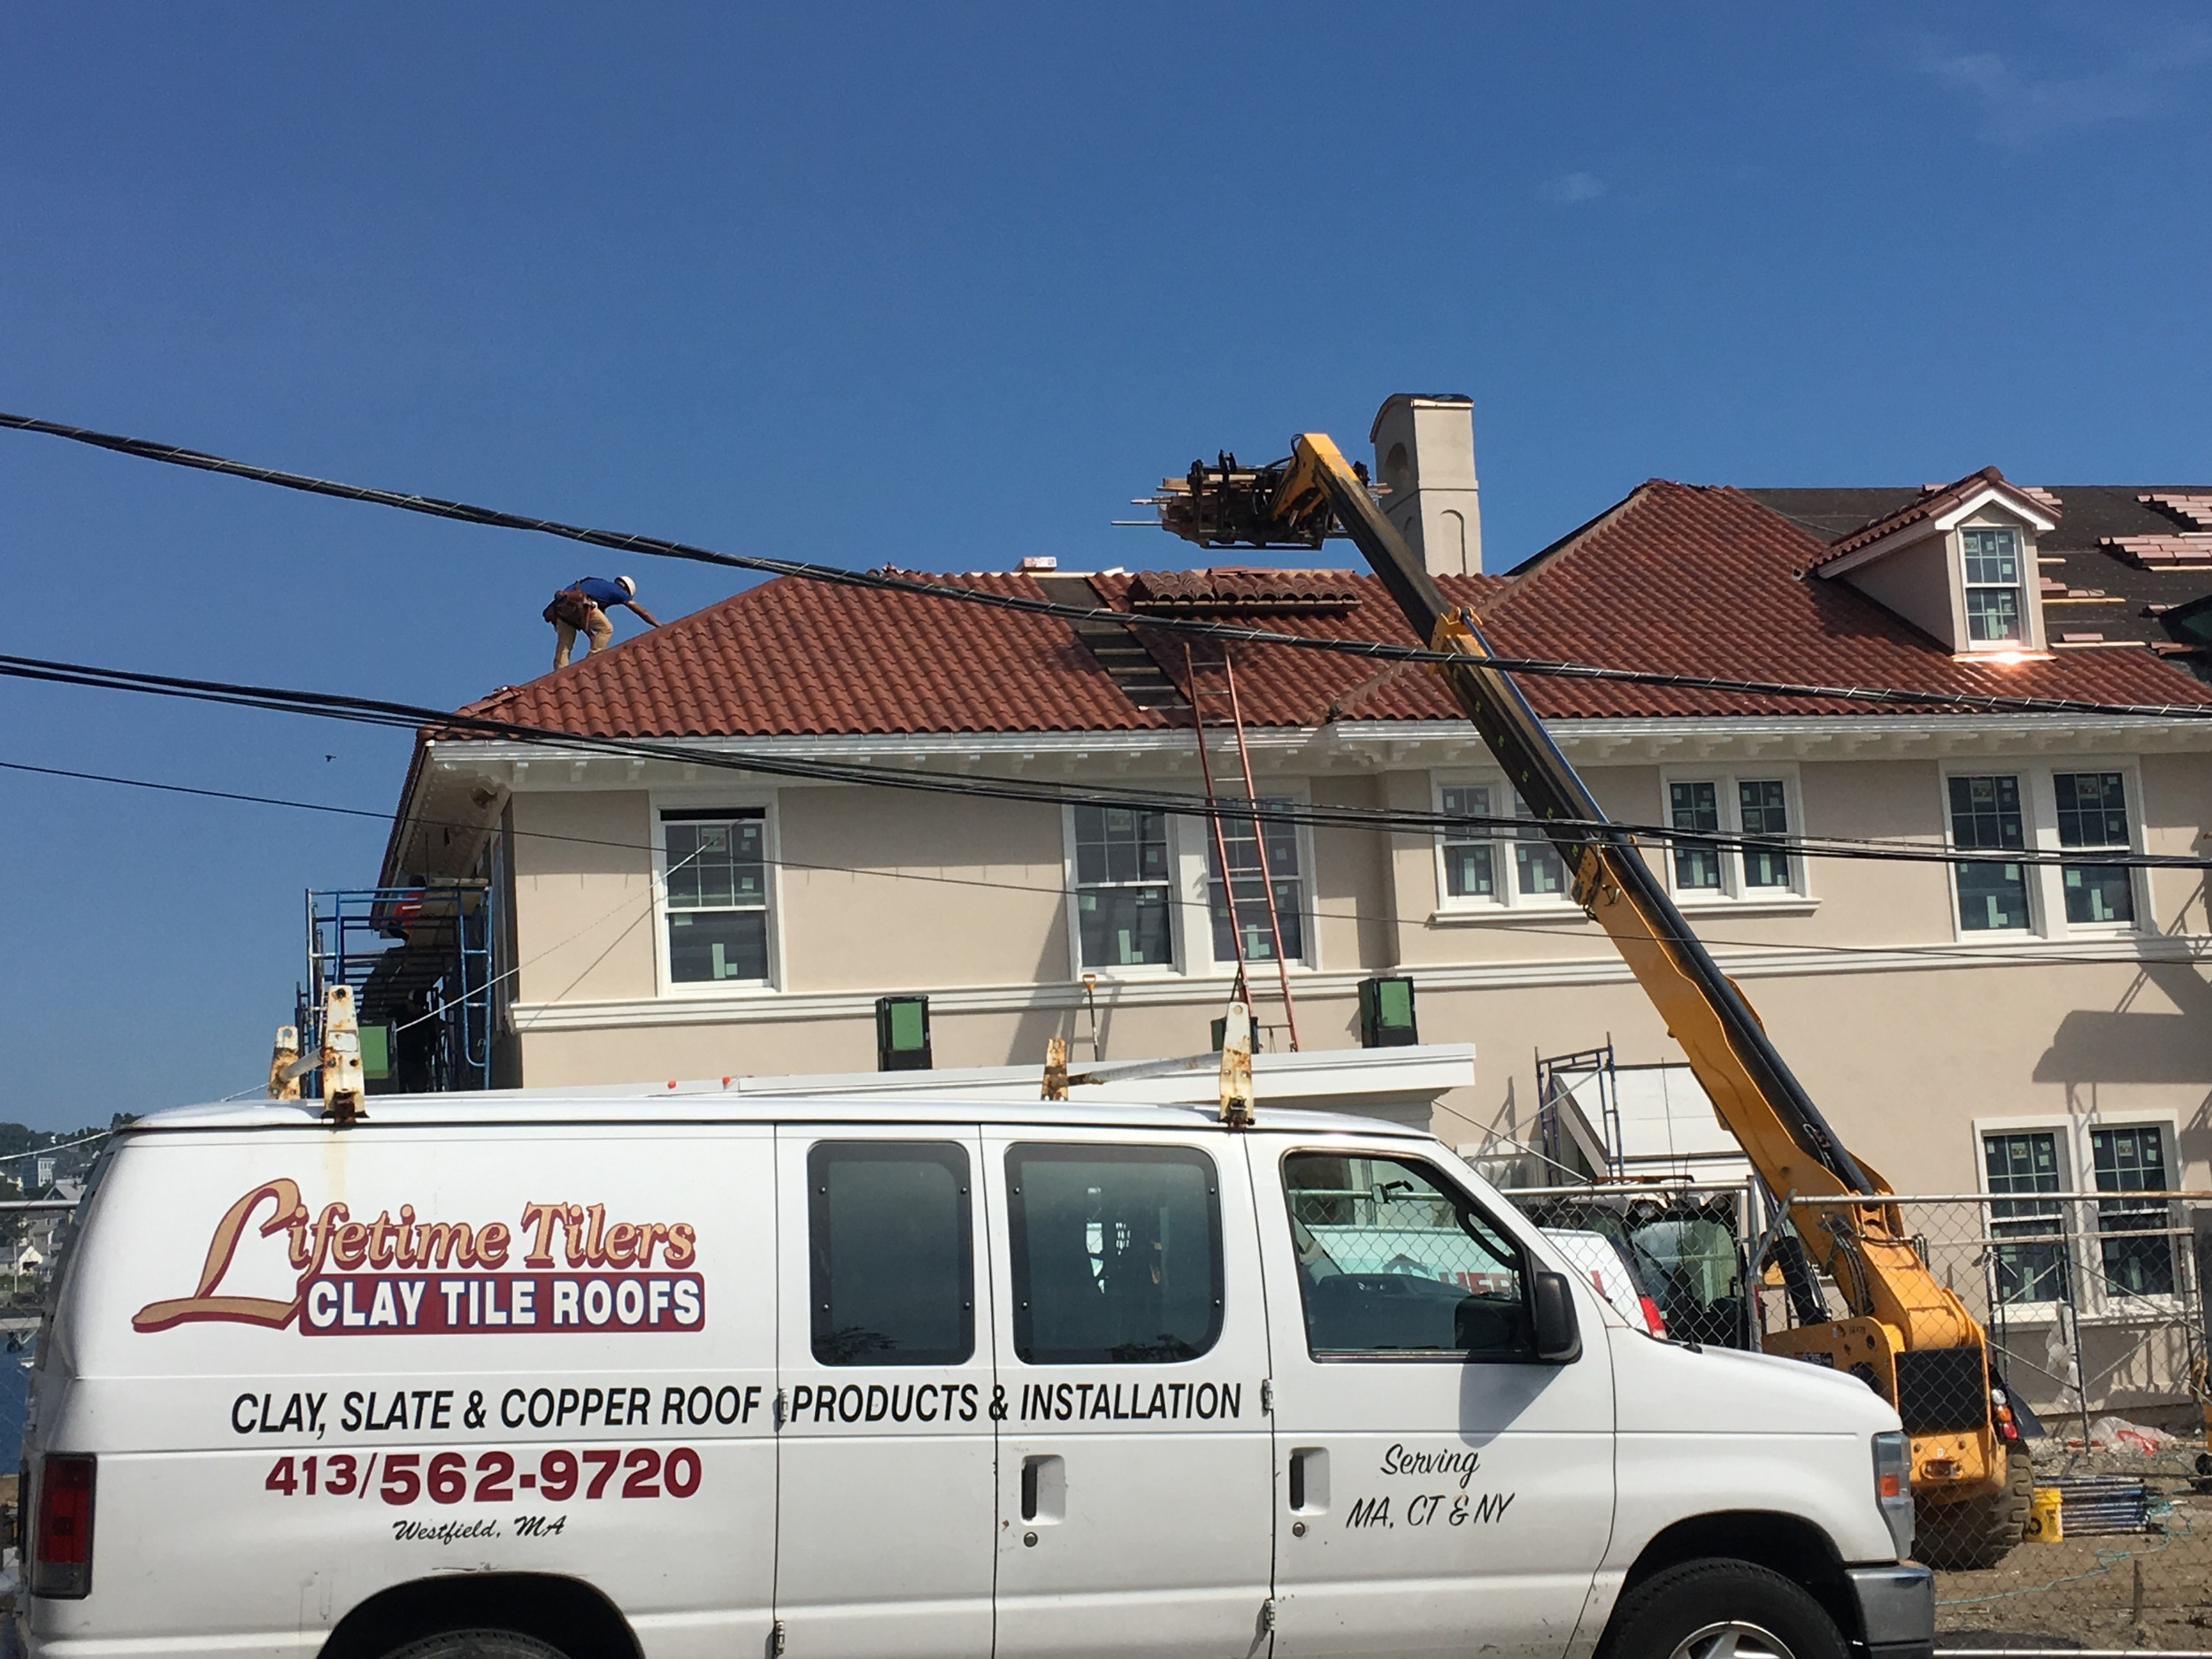 Lifetime Tilers - Roofing Contractors - Tile, Slate, & Copper Specialists - Massachusetts